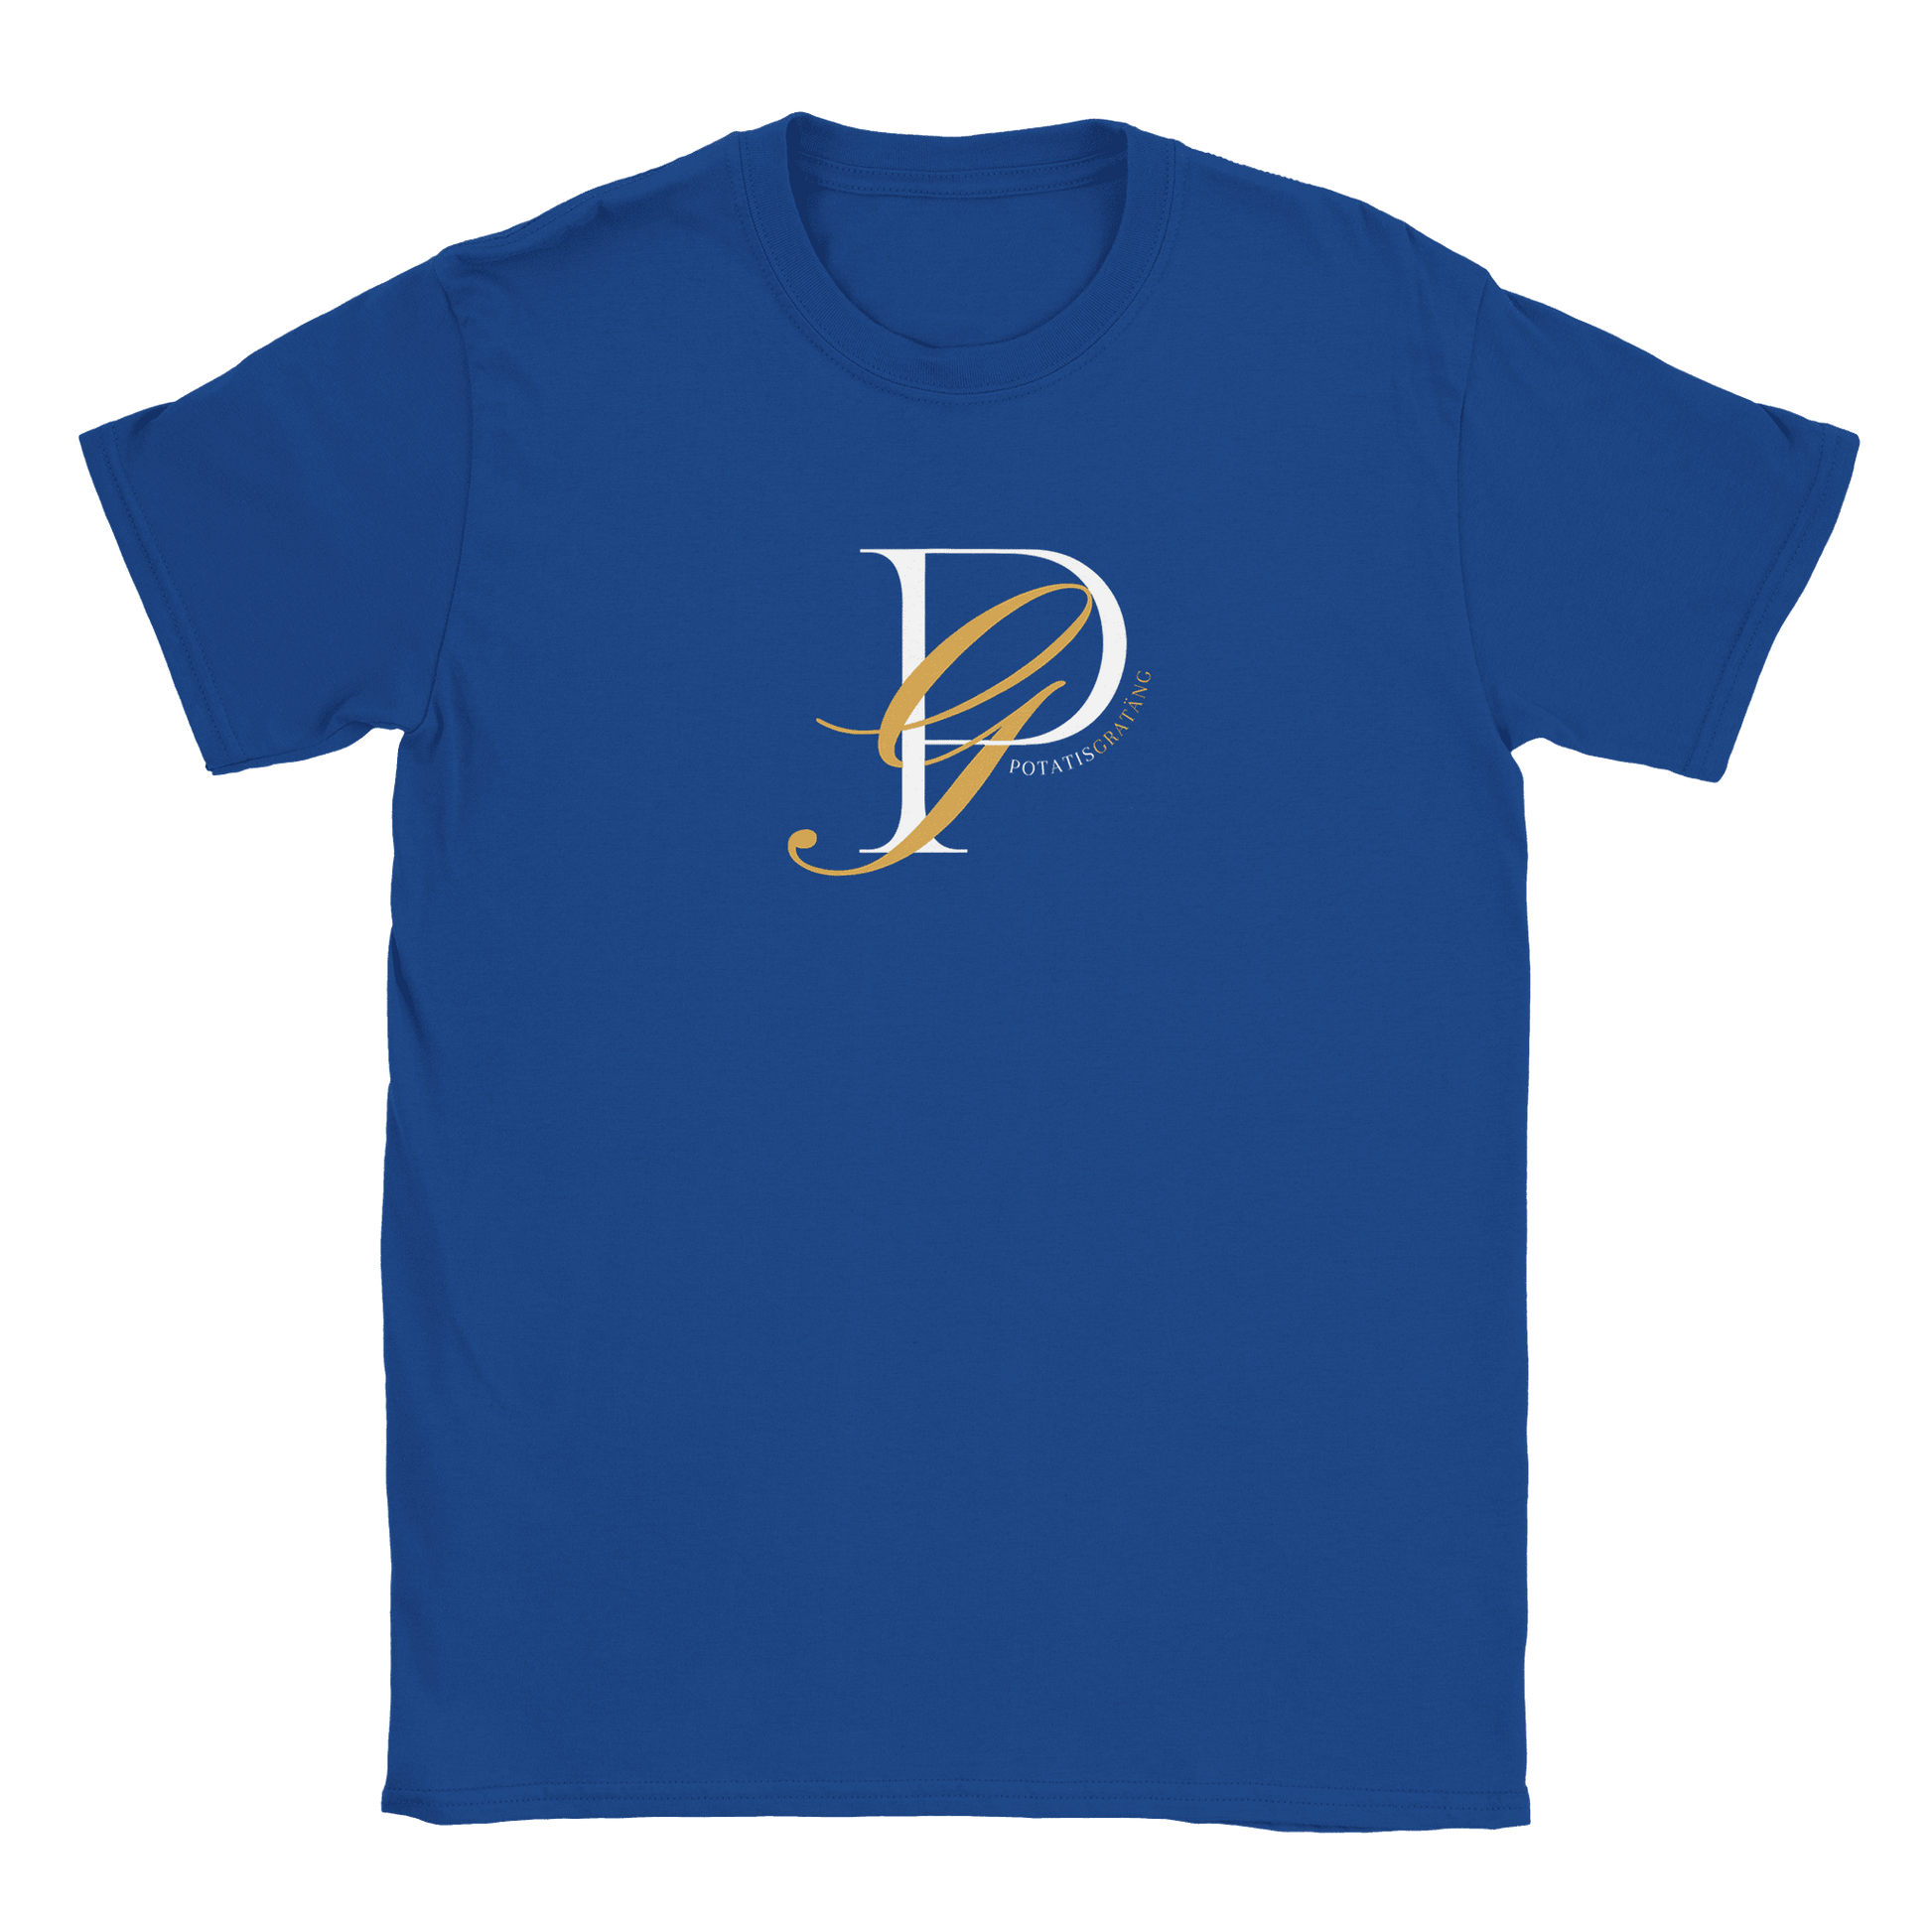 Potatisgratäng - T-shirt Royal